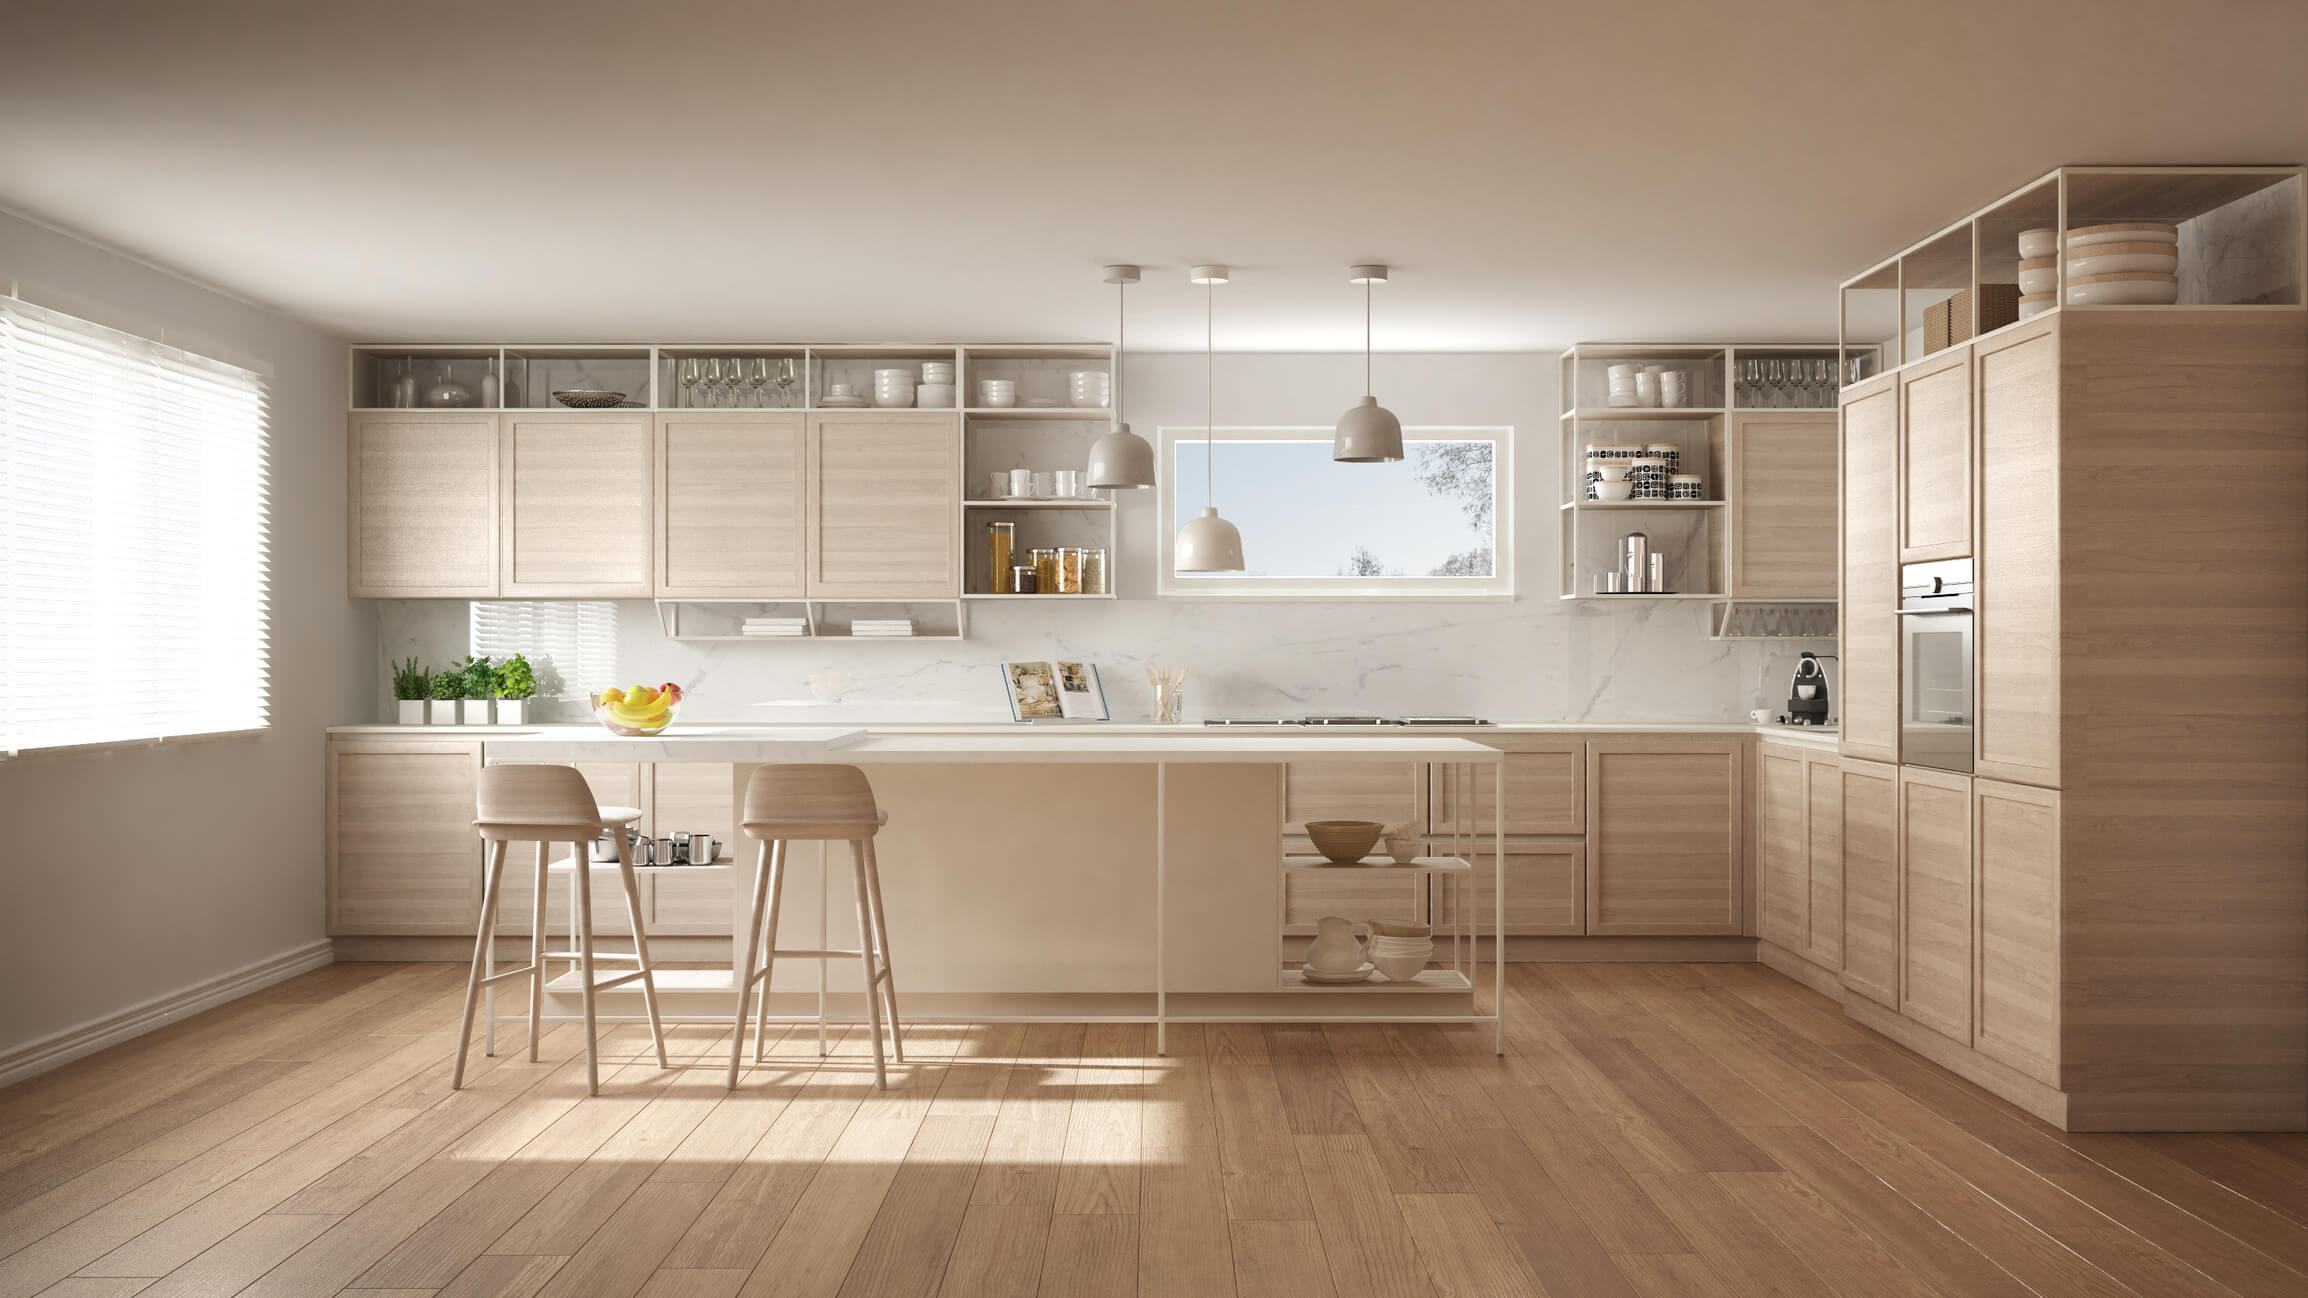 Replacing Your Kitchen Floor? 3 Flooring Options Worth Considering